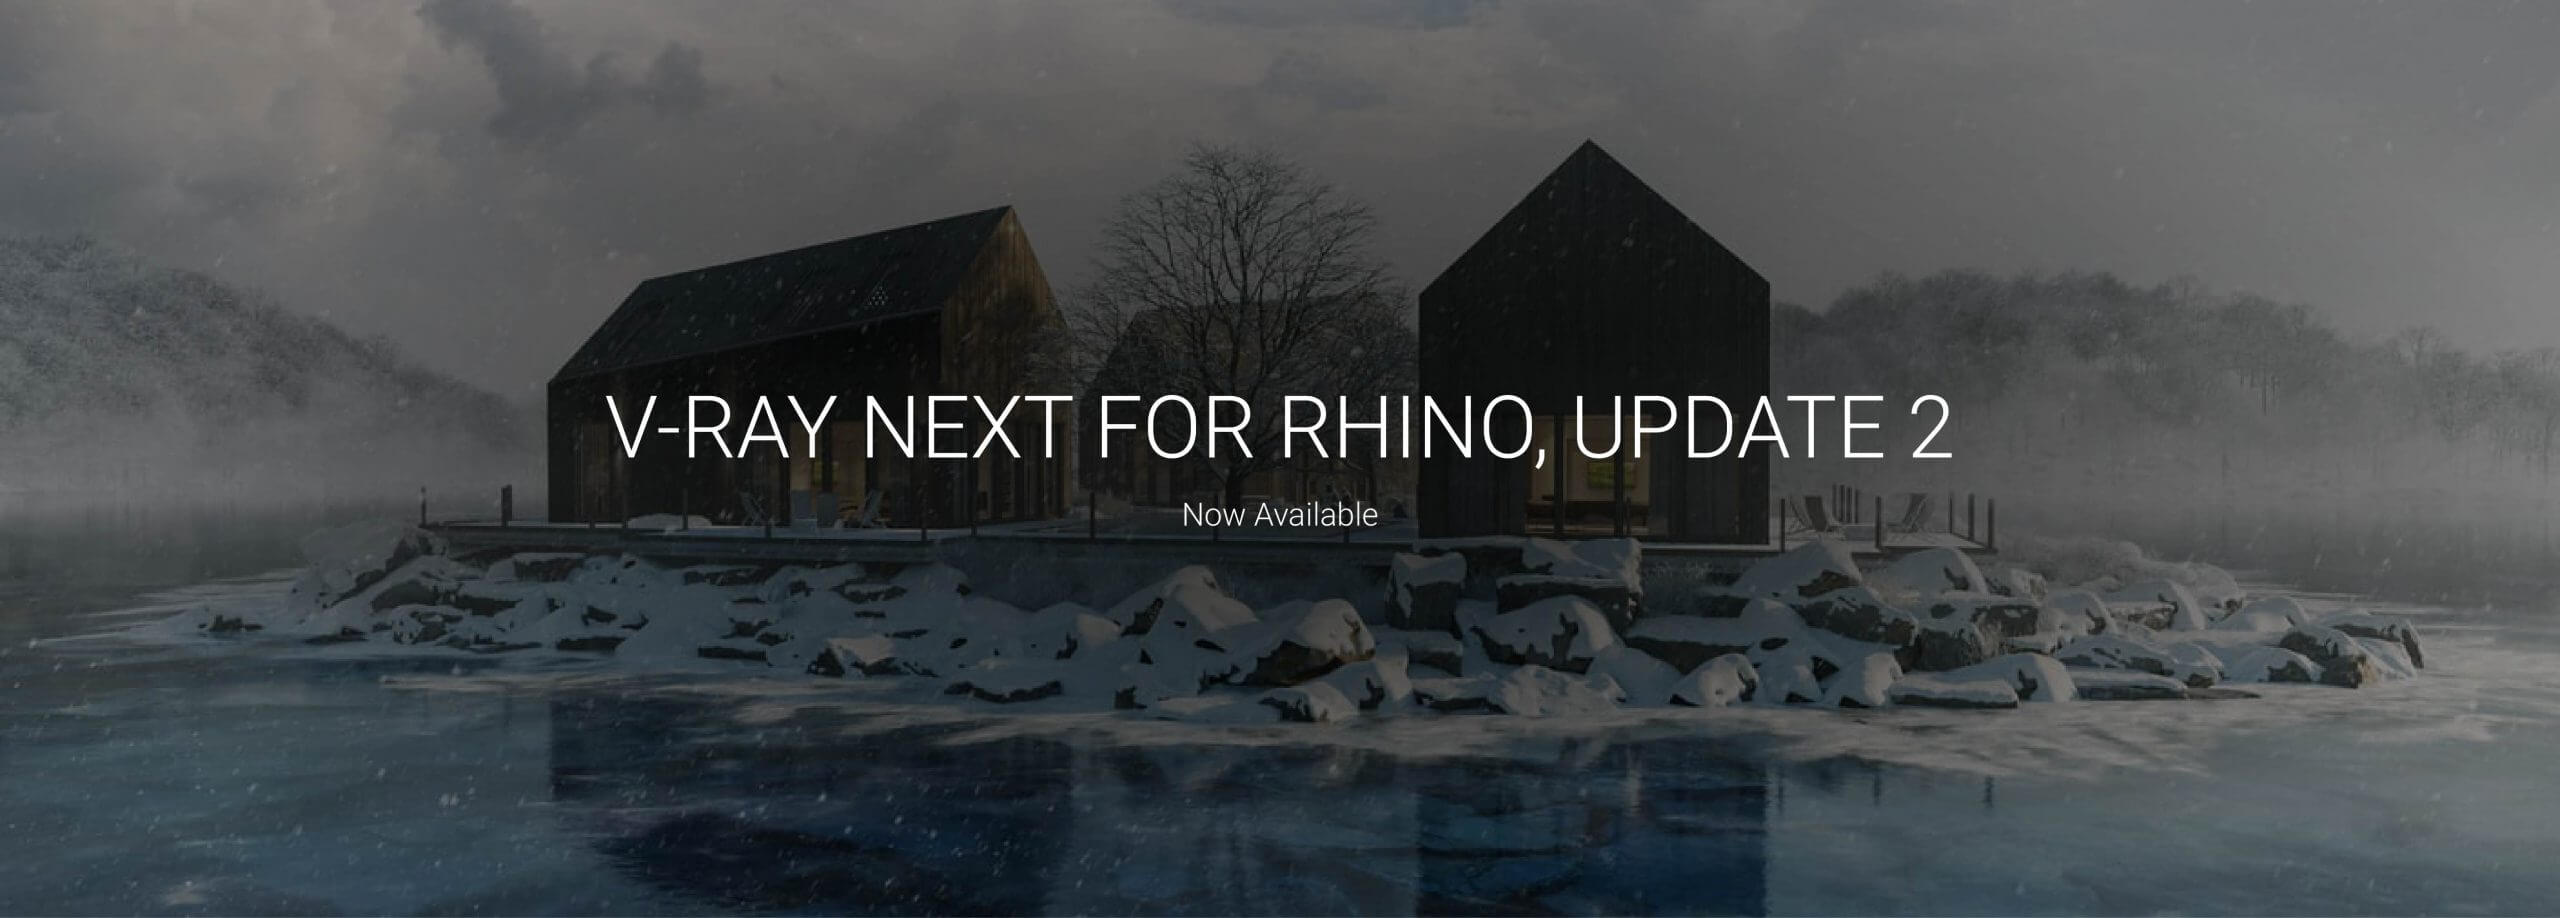 VRay Next for Rhino